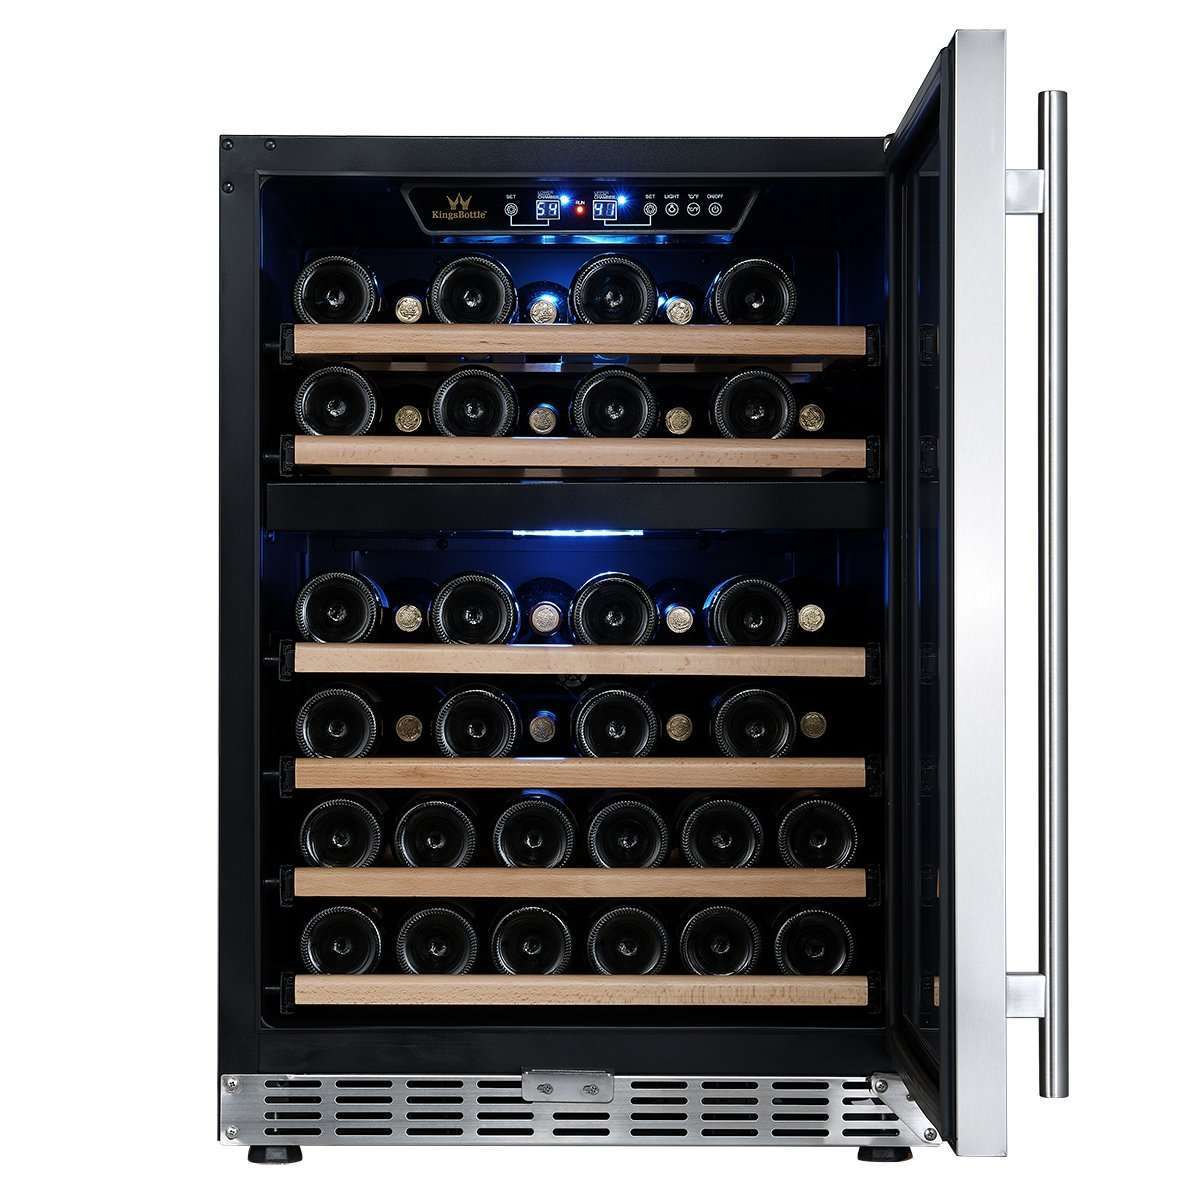 Kingsbottle KBUSF54D 24" Dual Zone Under Counter Built-in Wine Cooler